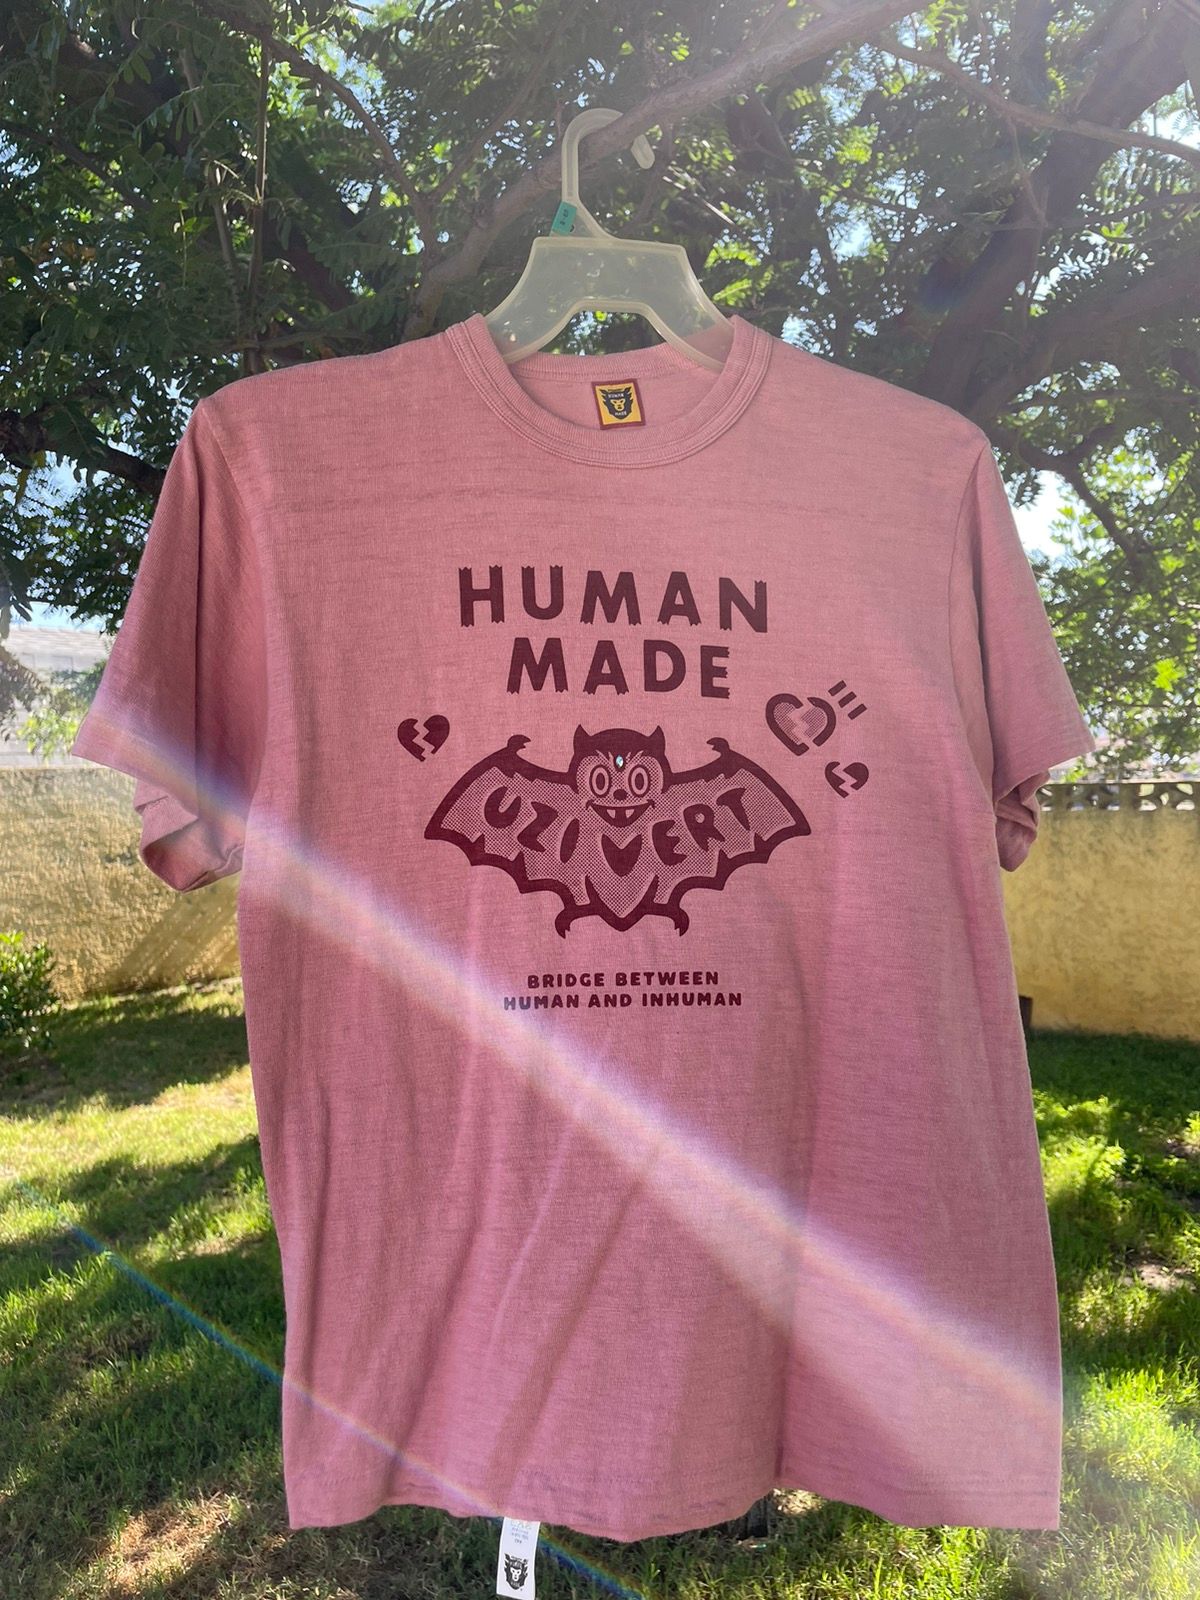 Human Made x Lil Uzi Vert Collaboration T-shirt #2 Pink size 2XL